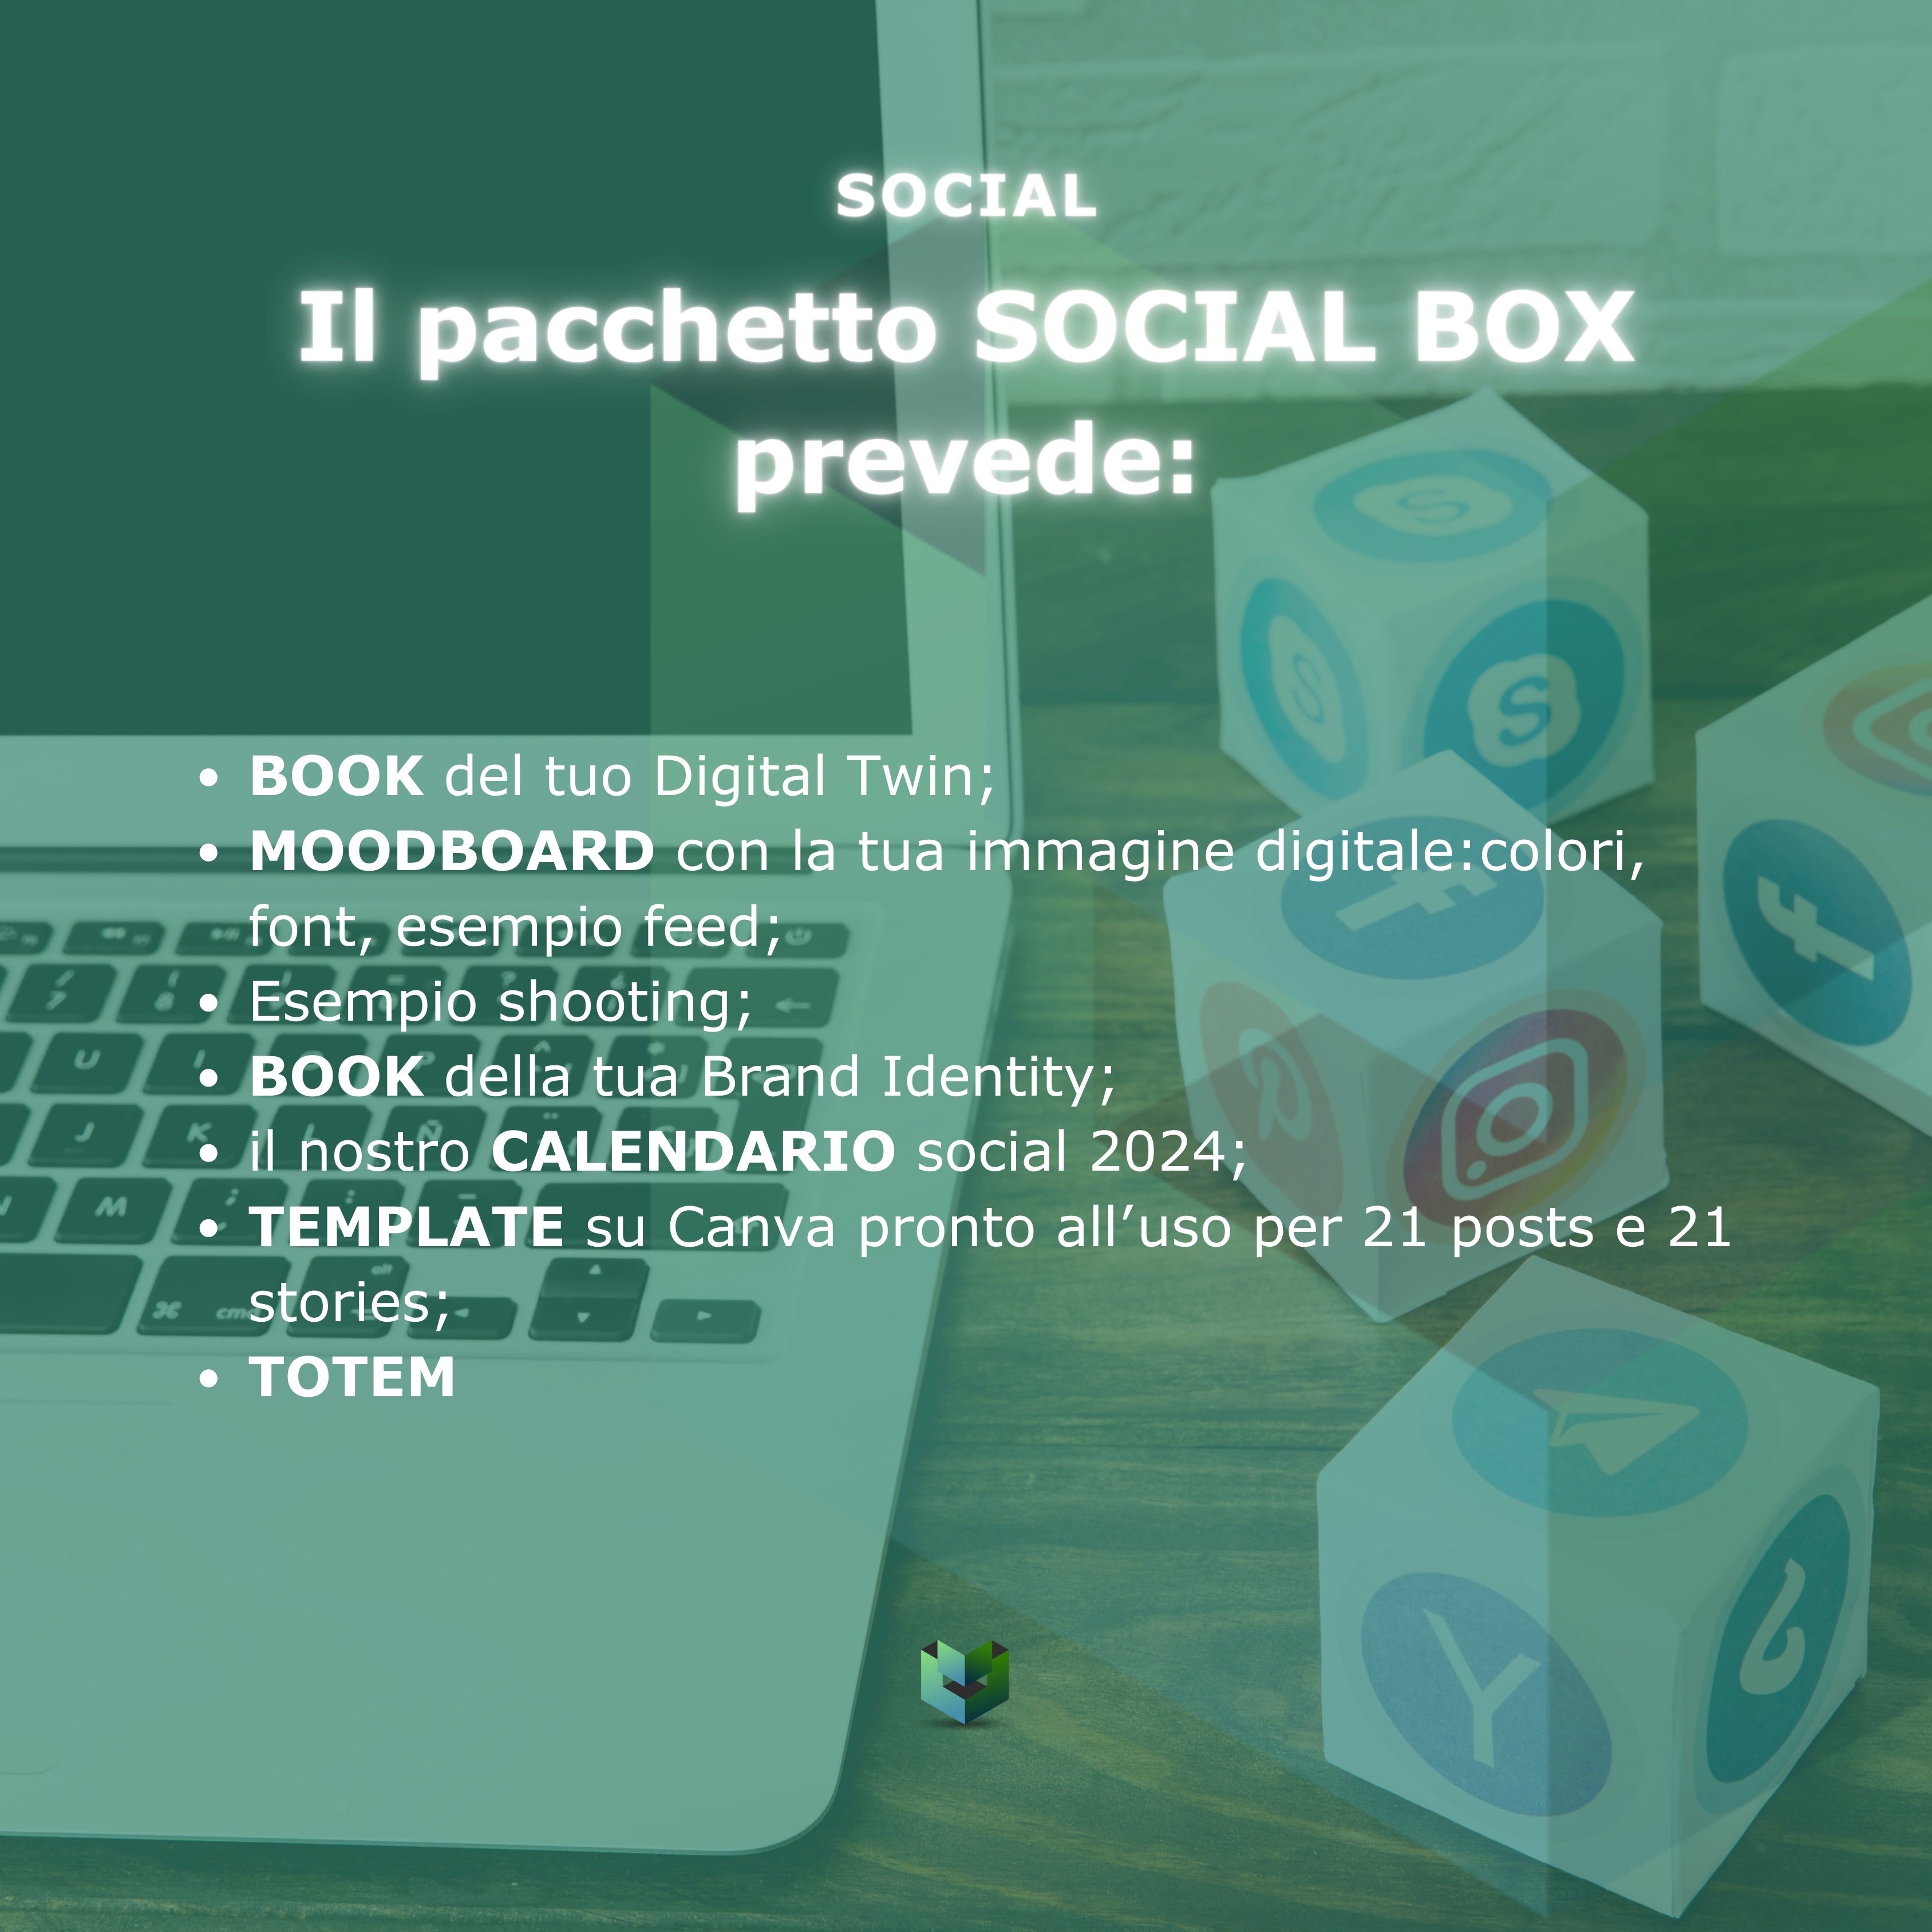 SOCIAL BOX